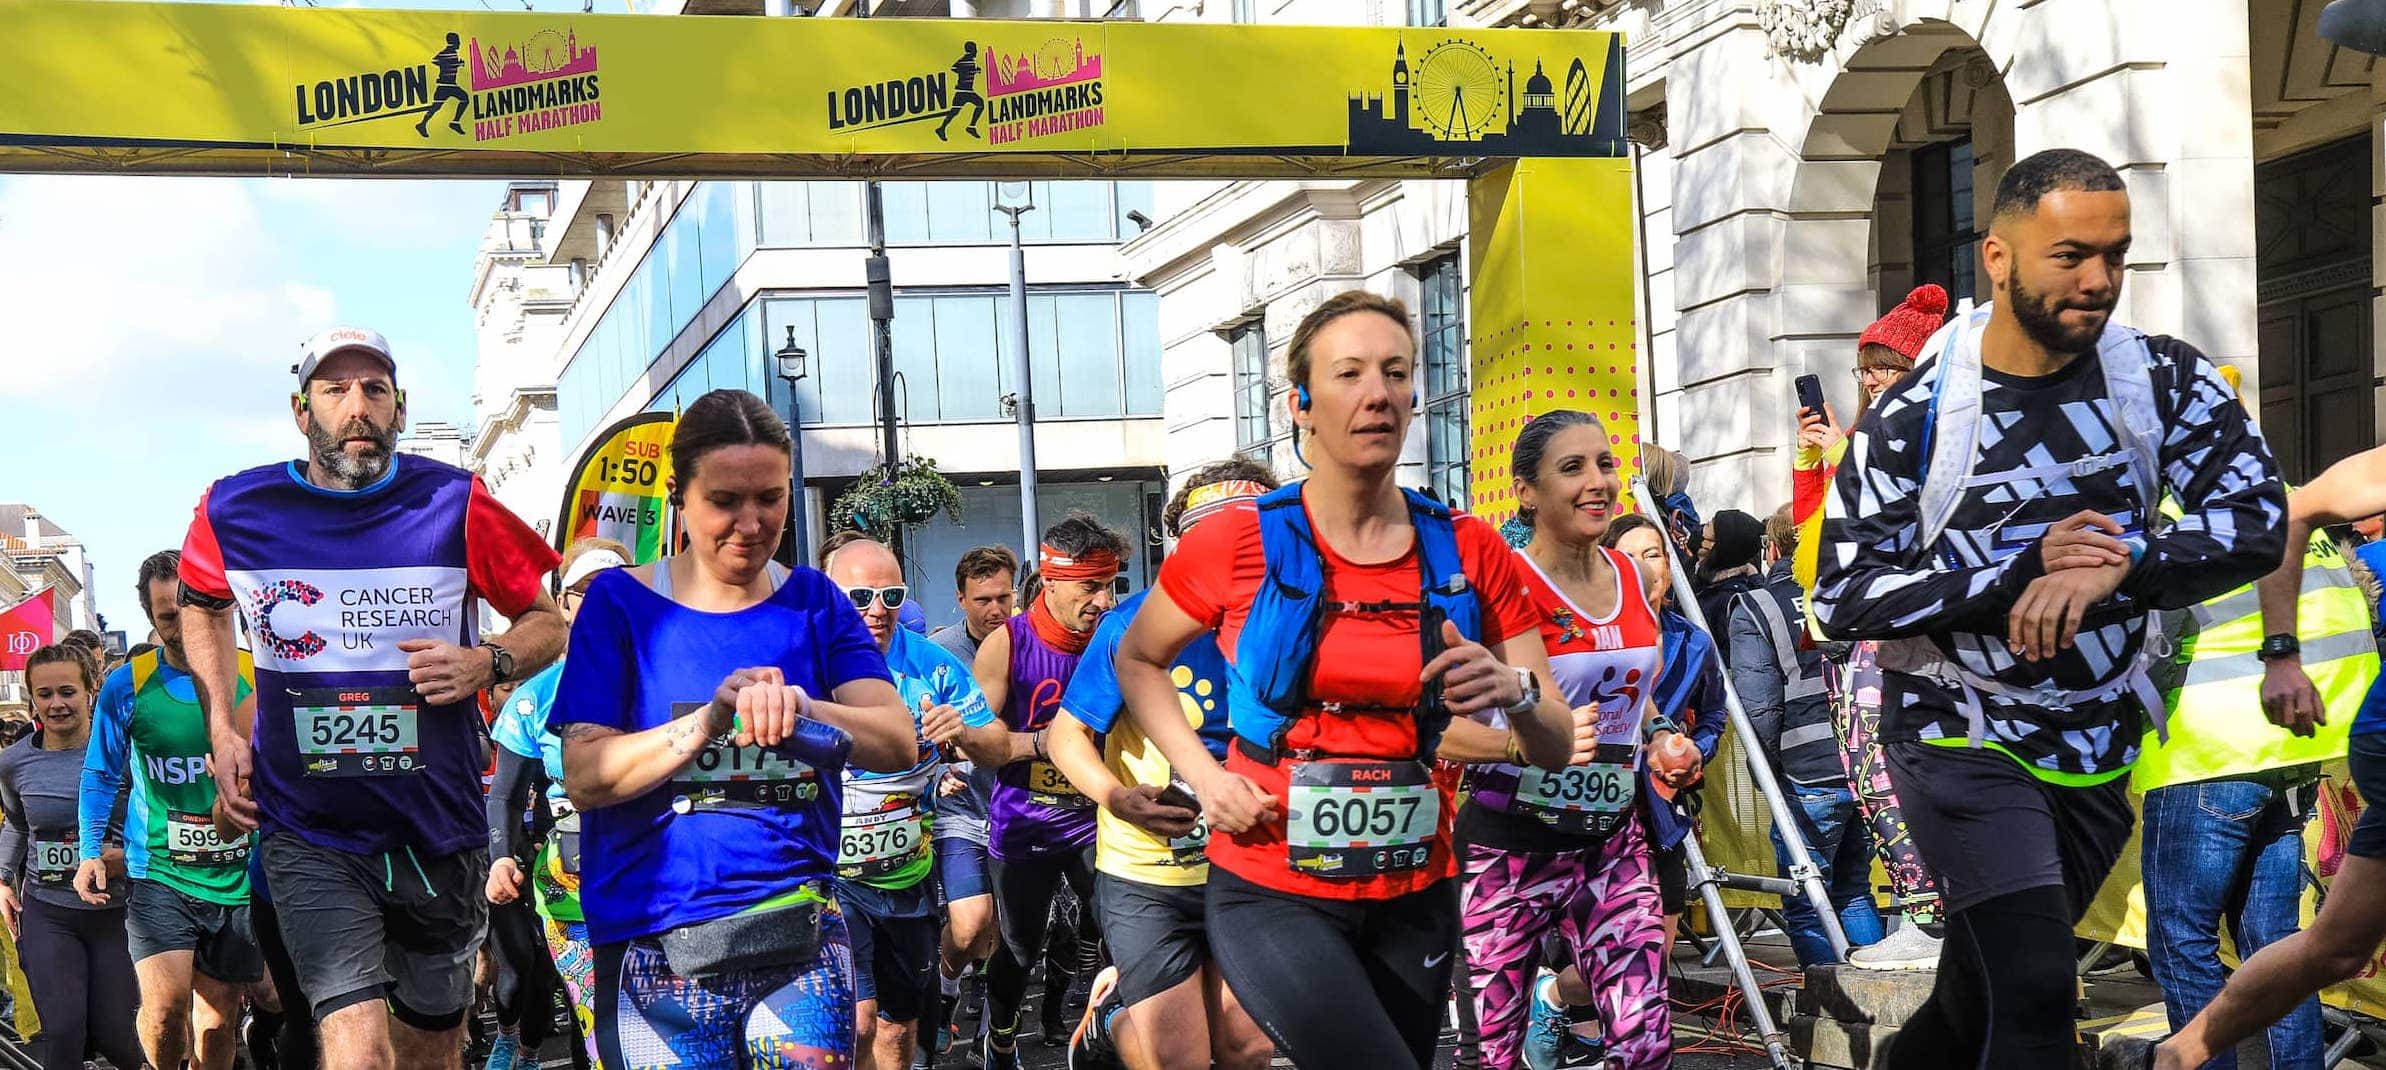 London landmarks half marathon returns to the capital in 2023